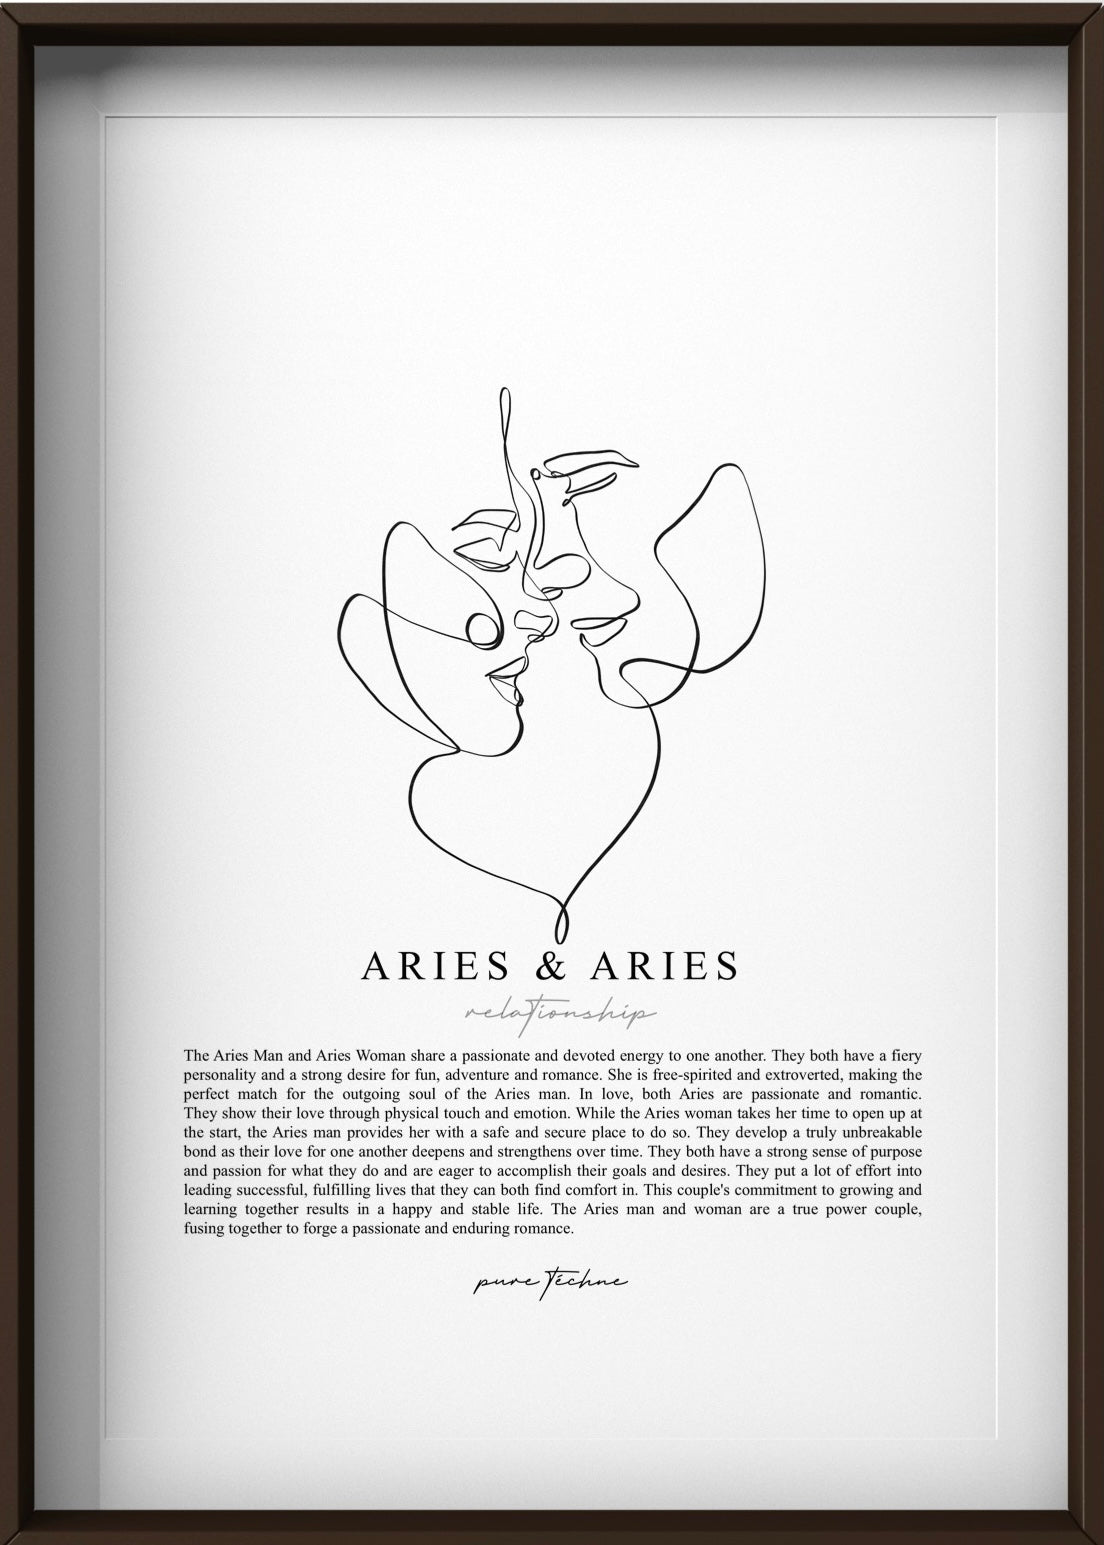 Aries Man & Aries Woman